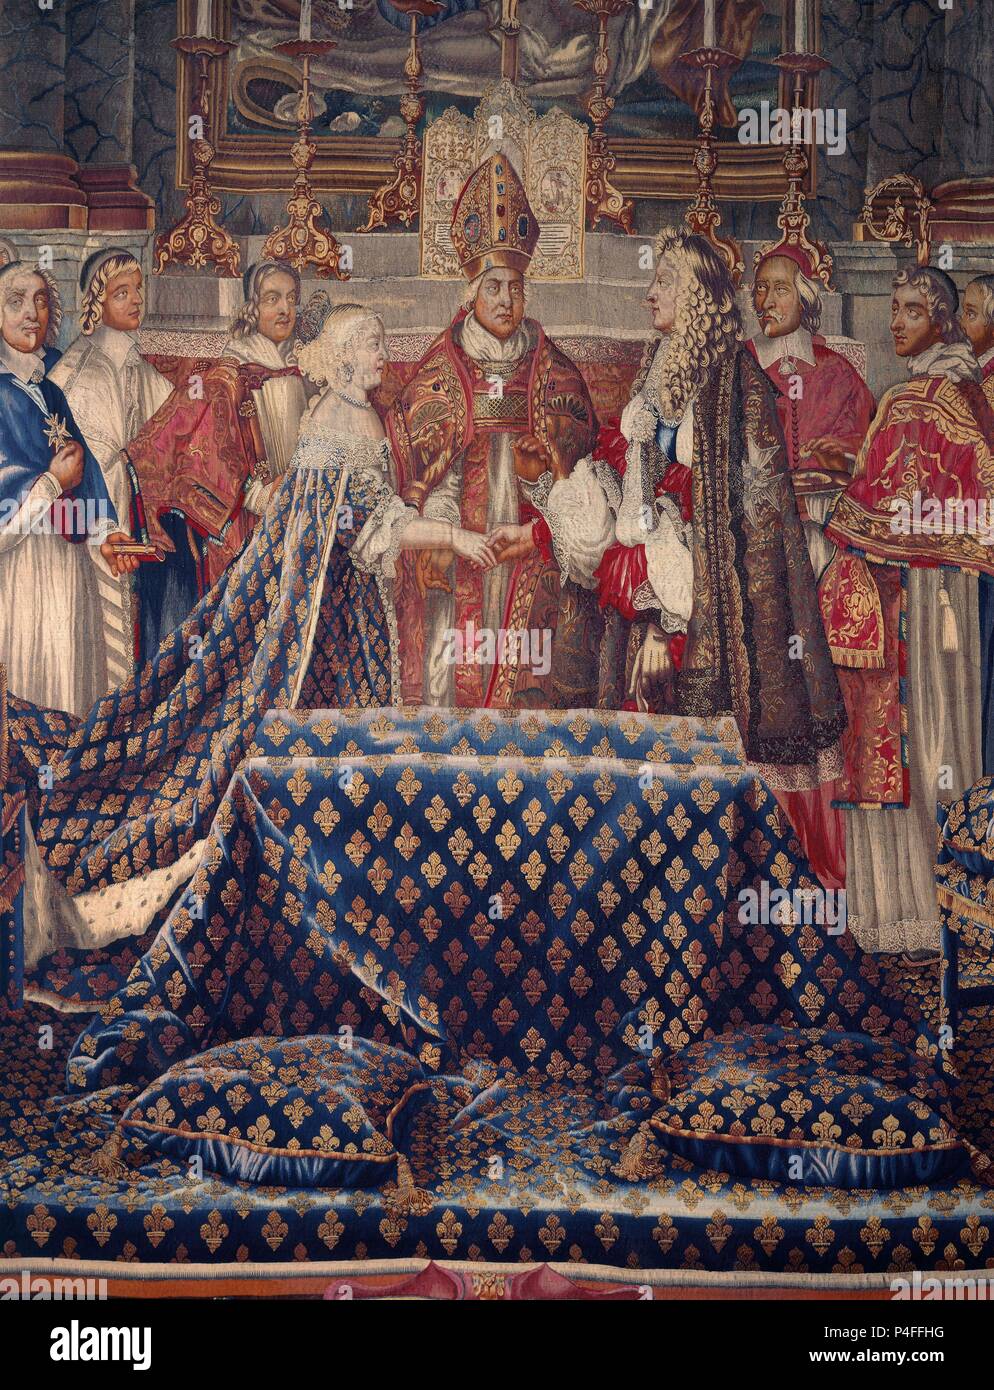 TAPIZ DE LA BODA DE LUIS XIV Y LA INFANTA MARIA TERESA DE AUSTRIA - SIGLO XVII. Autore: Charles Le Brun (1619-1690). Posizione: ambasciata francese, MADRID, Spagna. Foto Stock